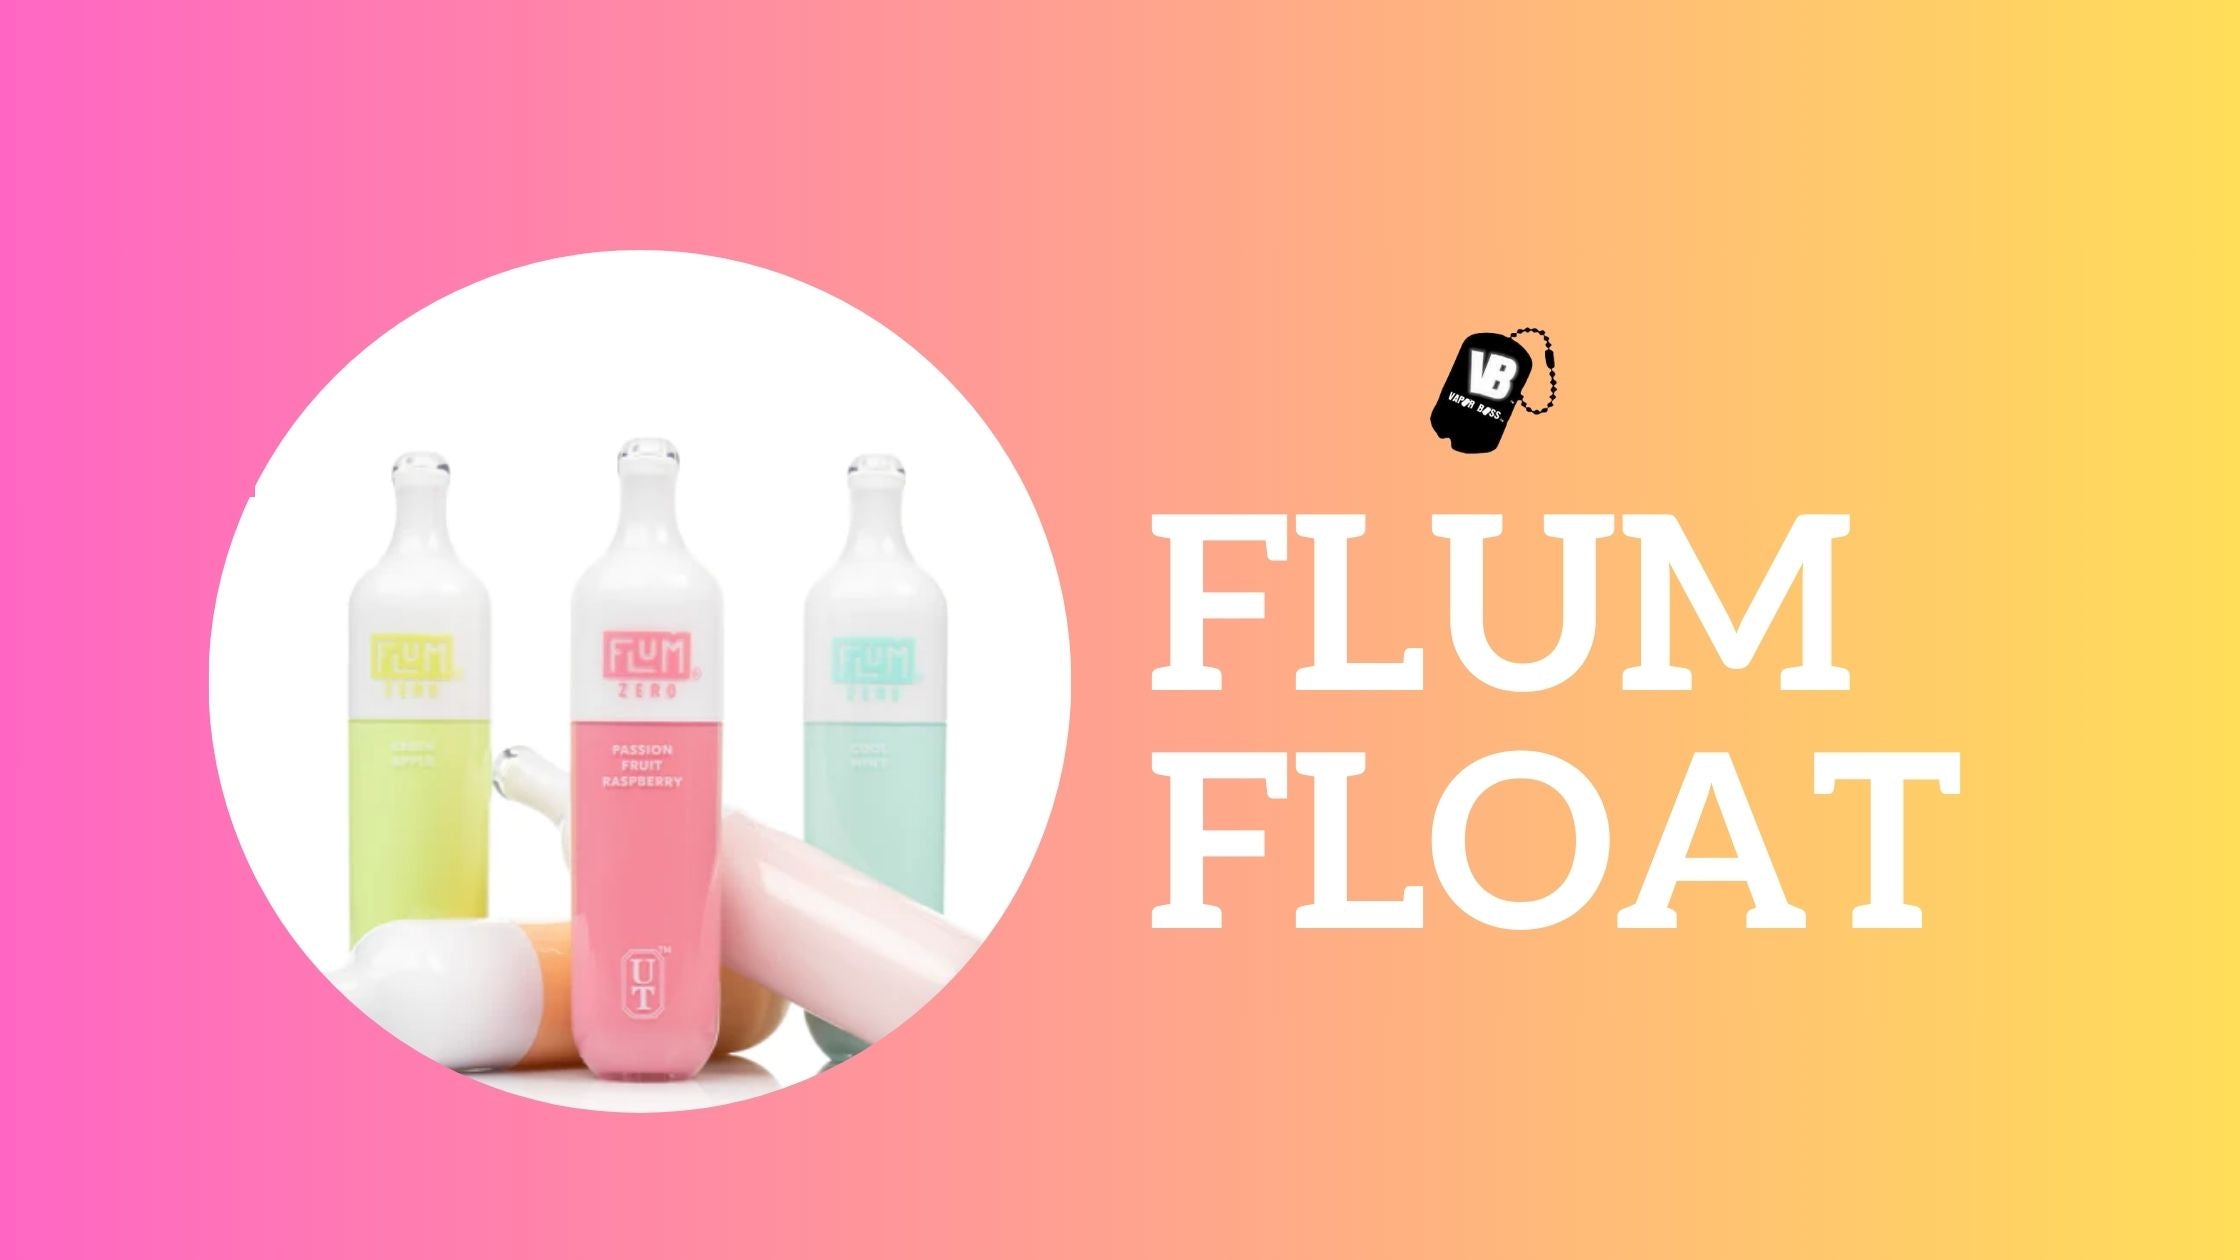 Flum Float